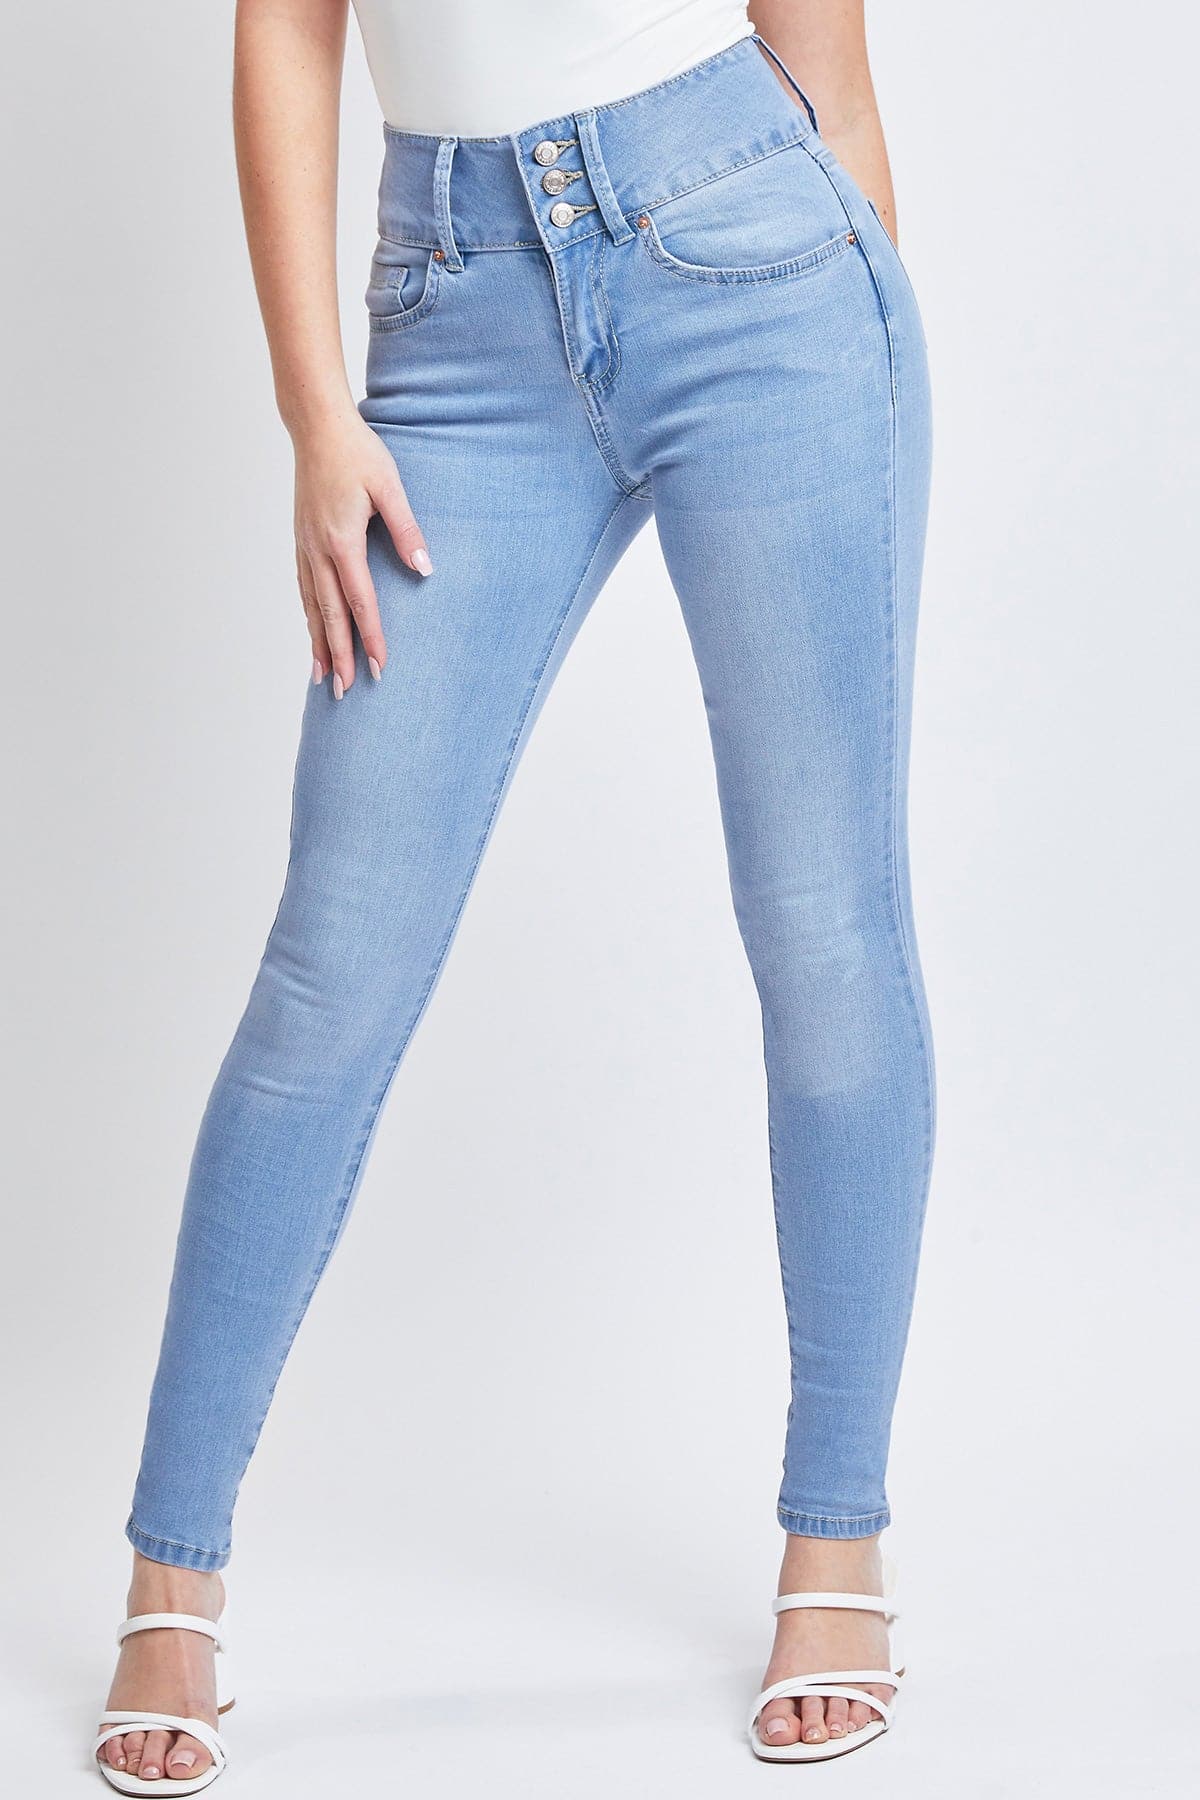 Judy Blue High Rise Button Fly Skinny Jeans for Women | 82319REG – Glik's